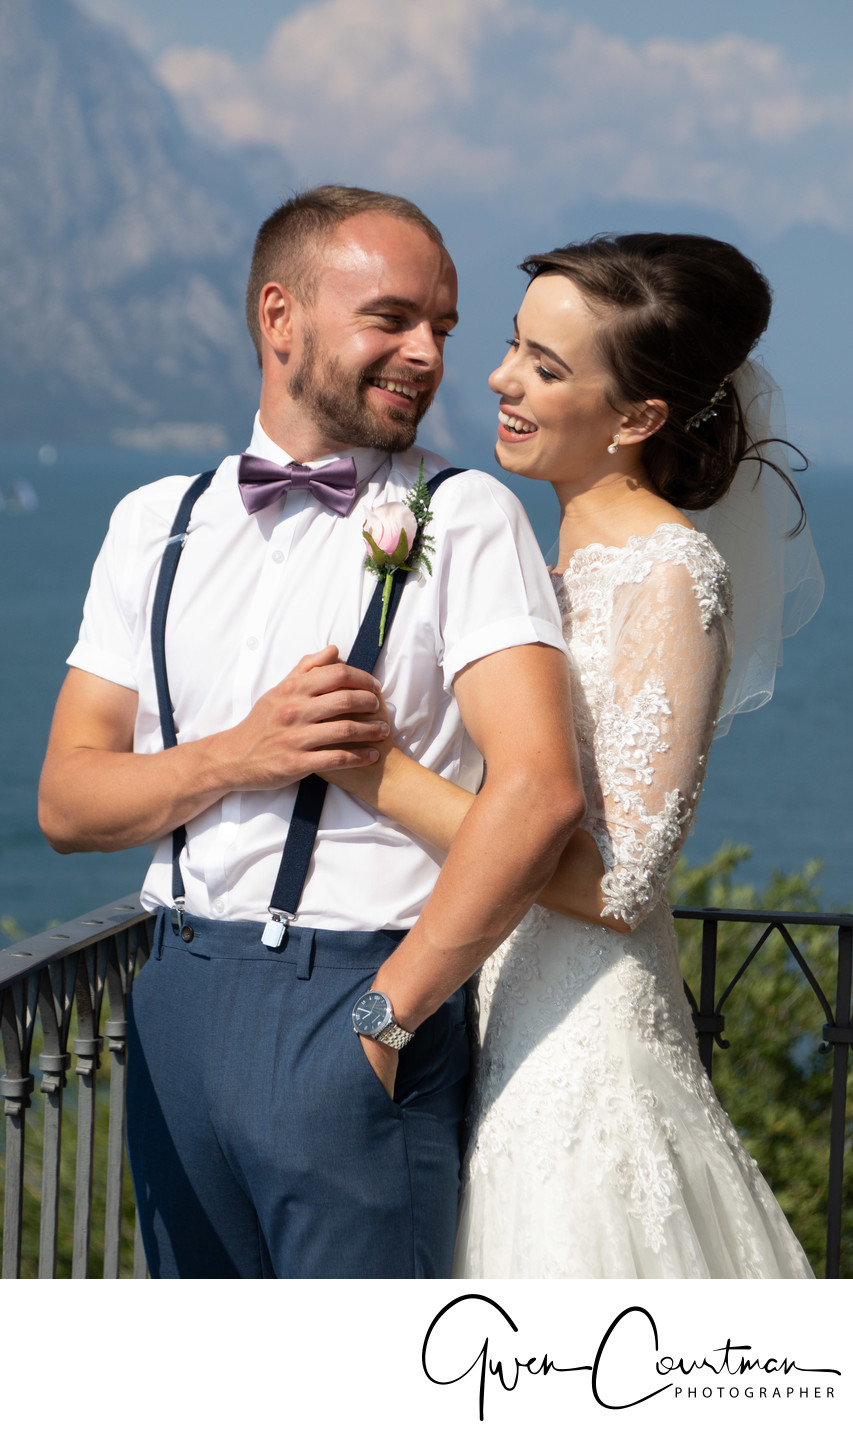 Lisa & Josh Wedding  Malcesine Italy.